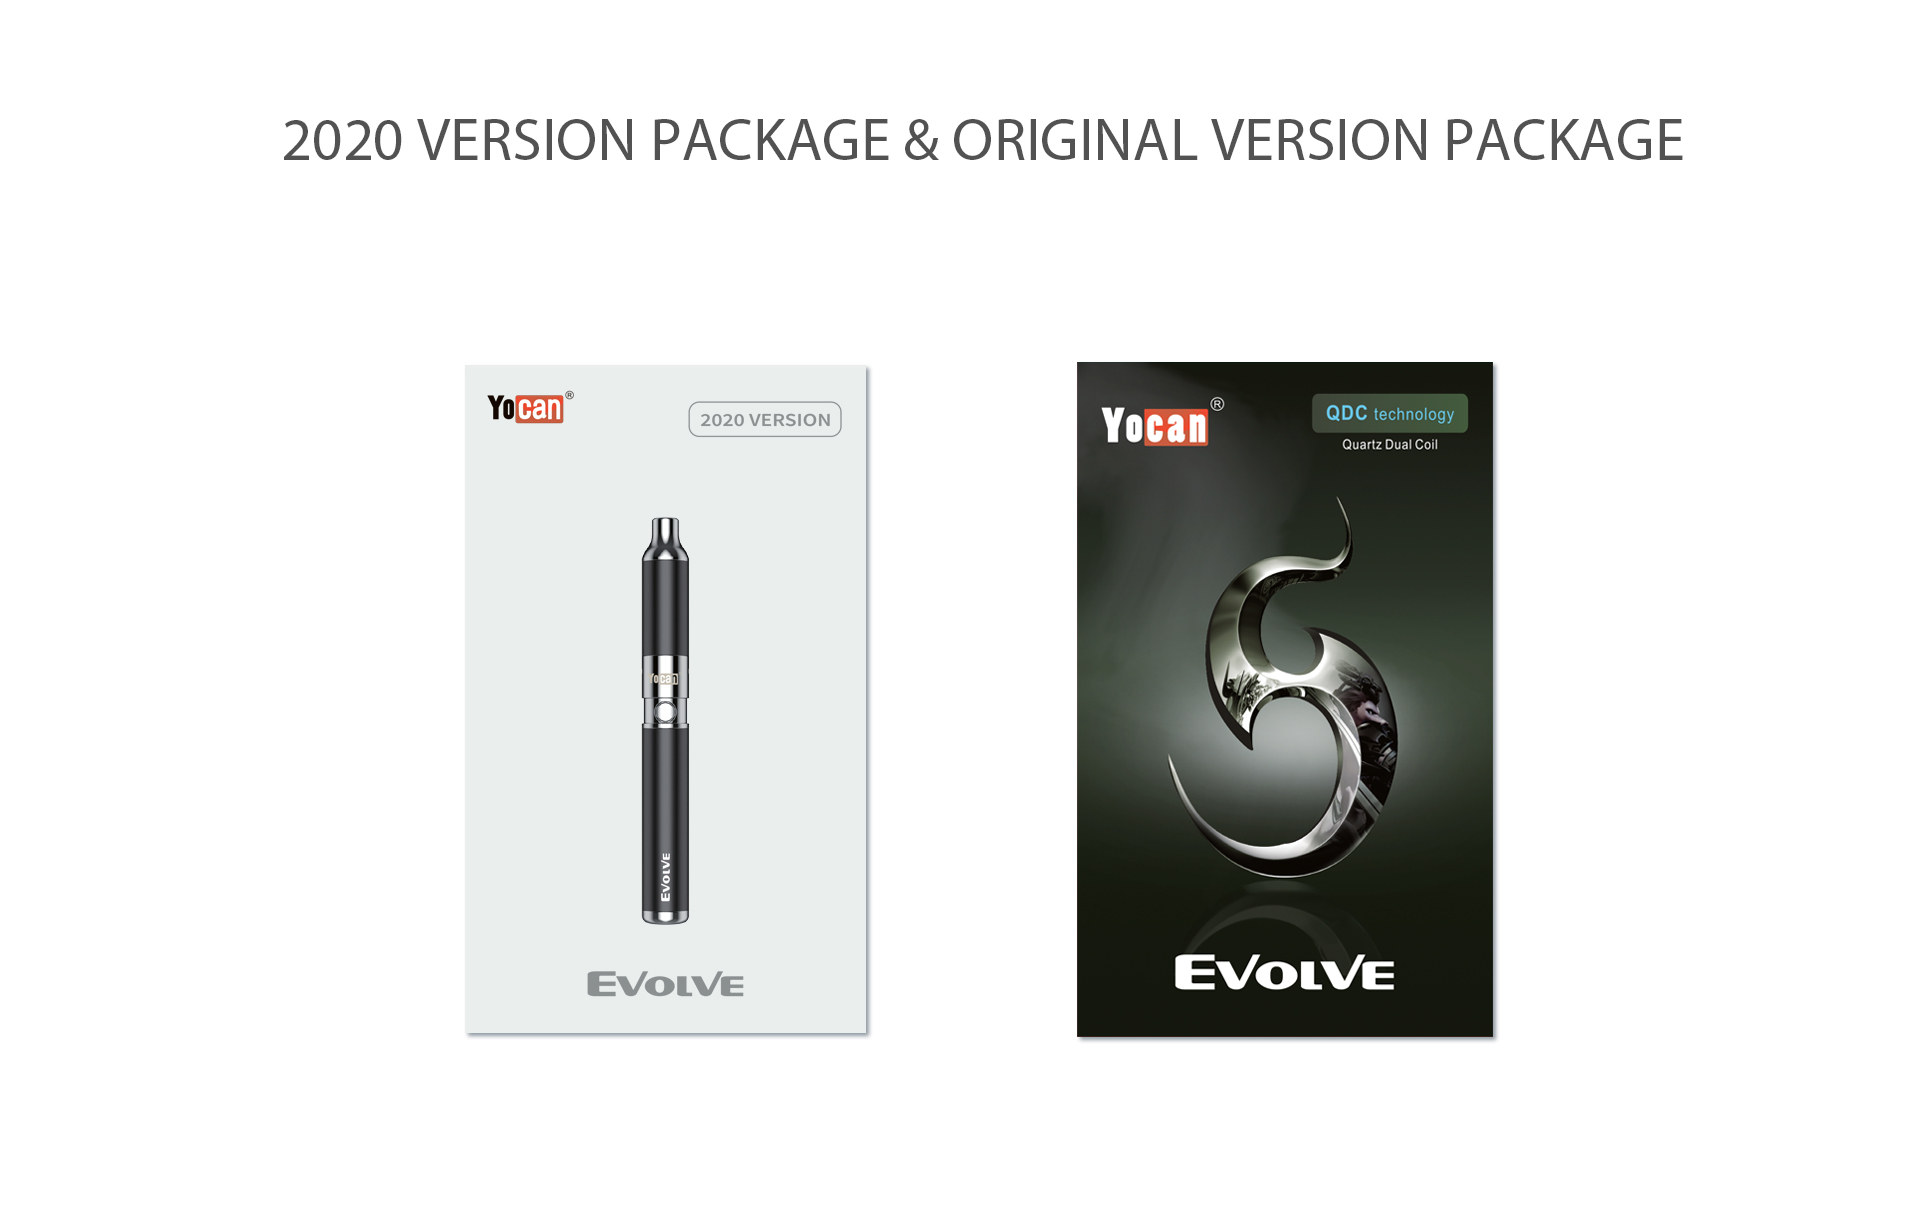 Yocan Evolve Vaporizer 2020 Version package box.